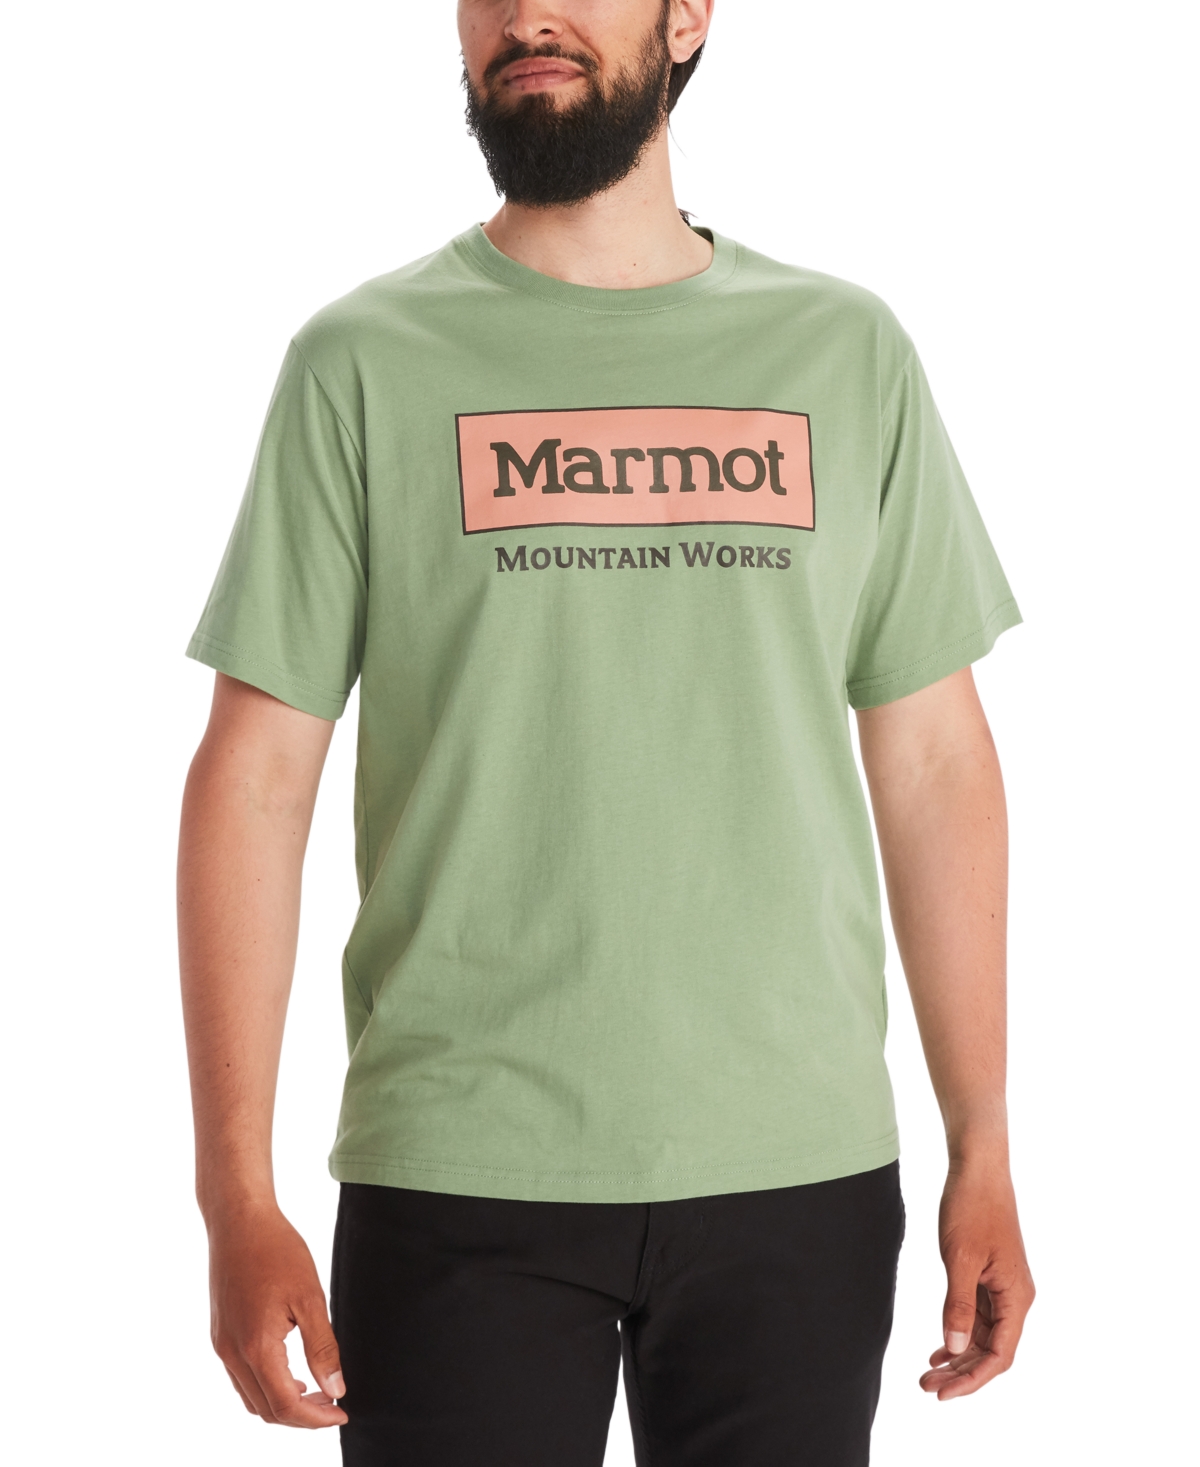 Marmot Men's Mountain Works Tee